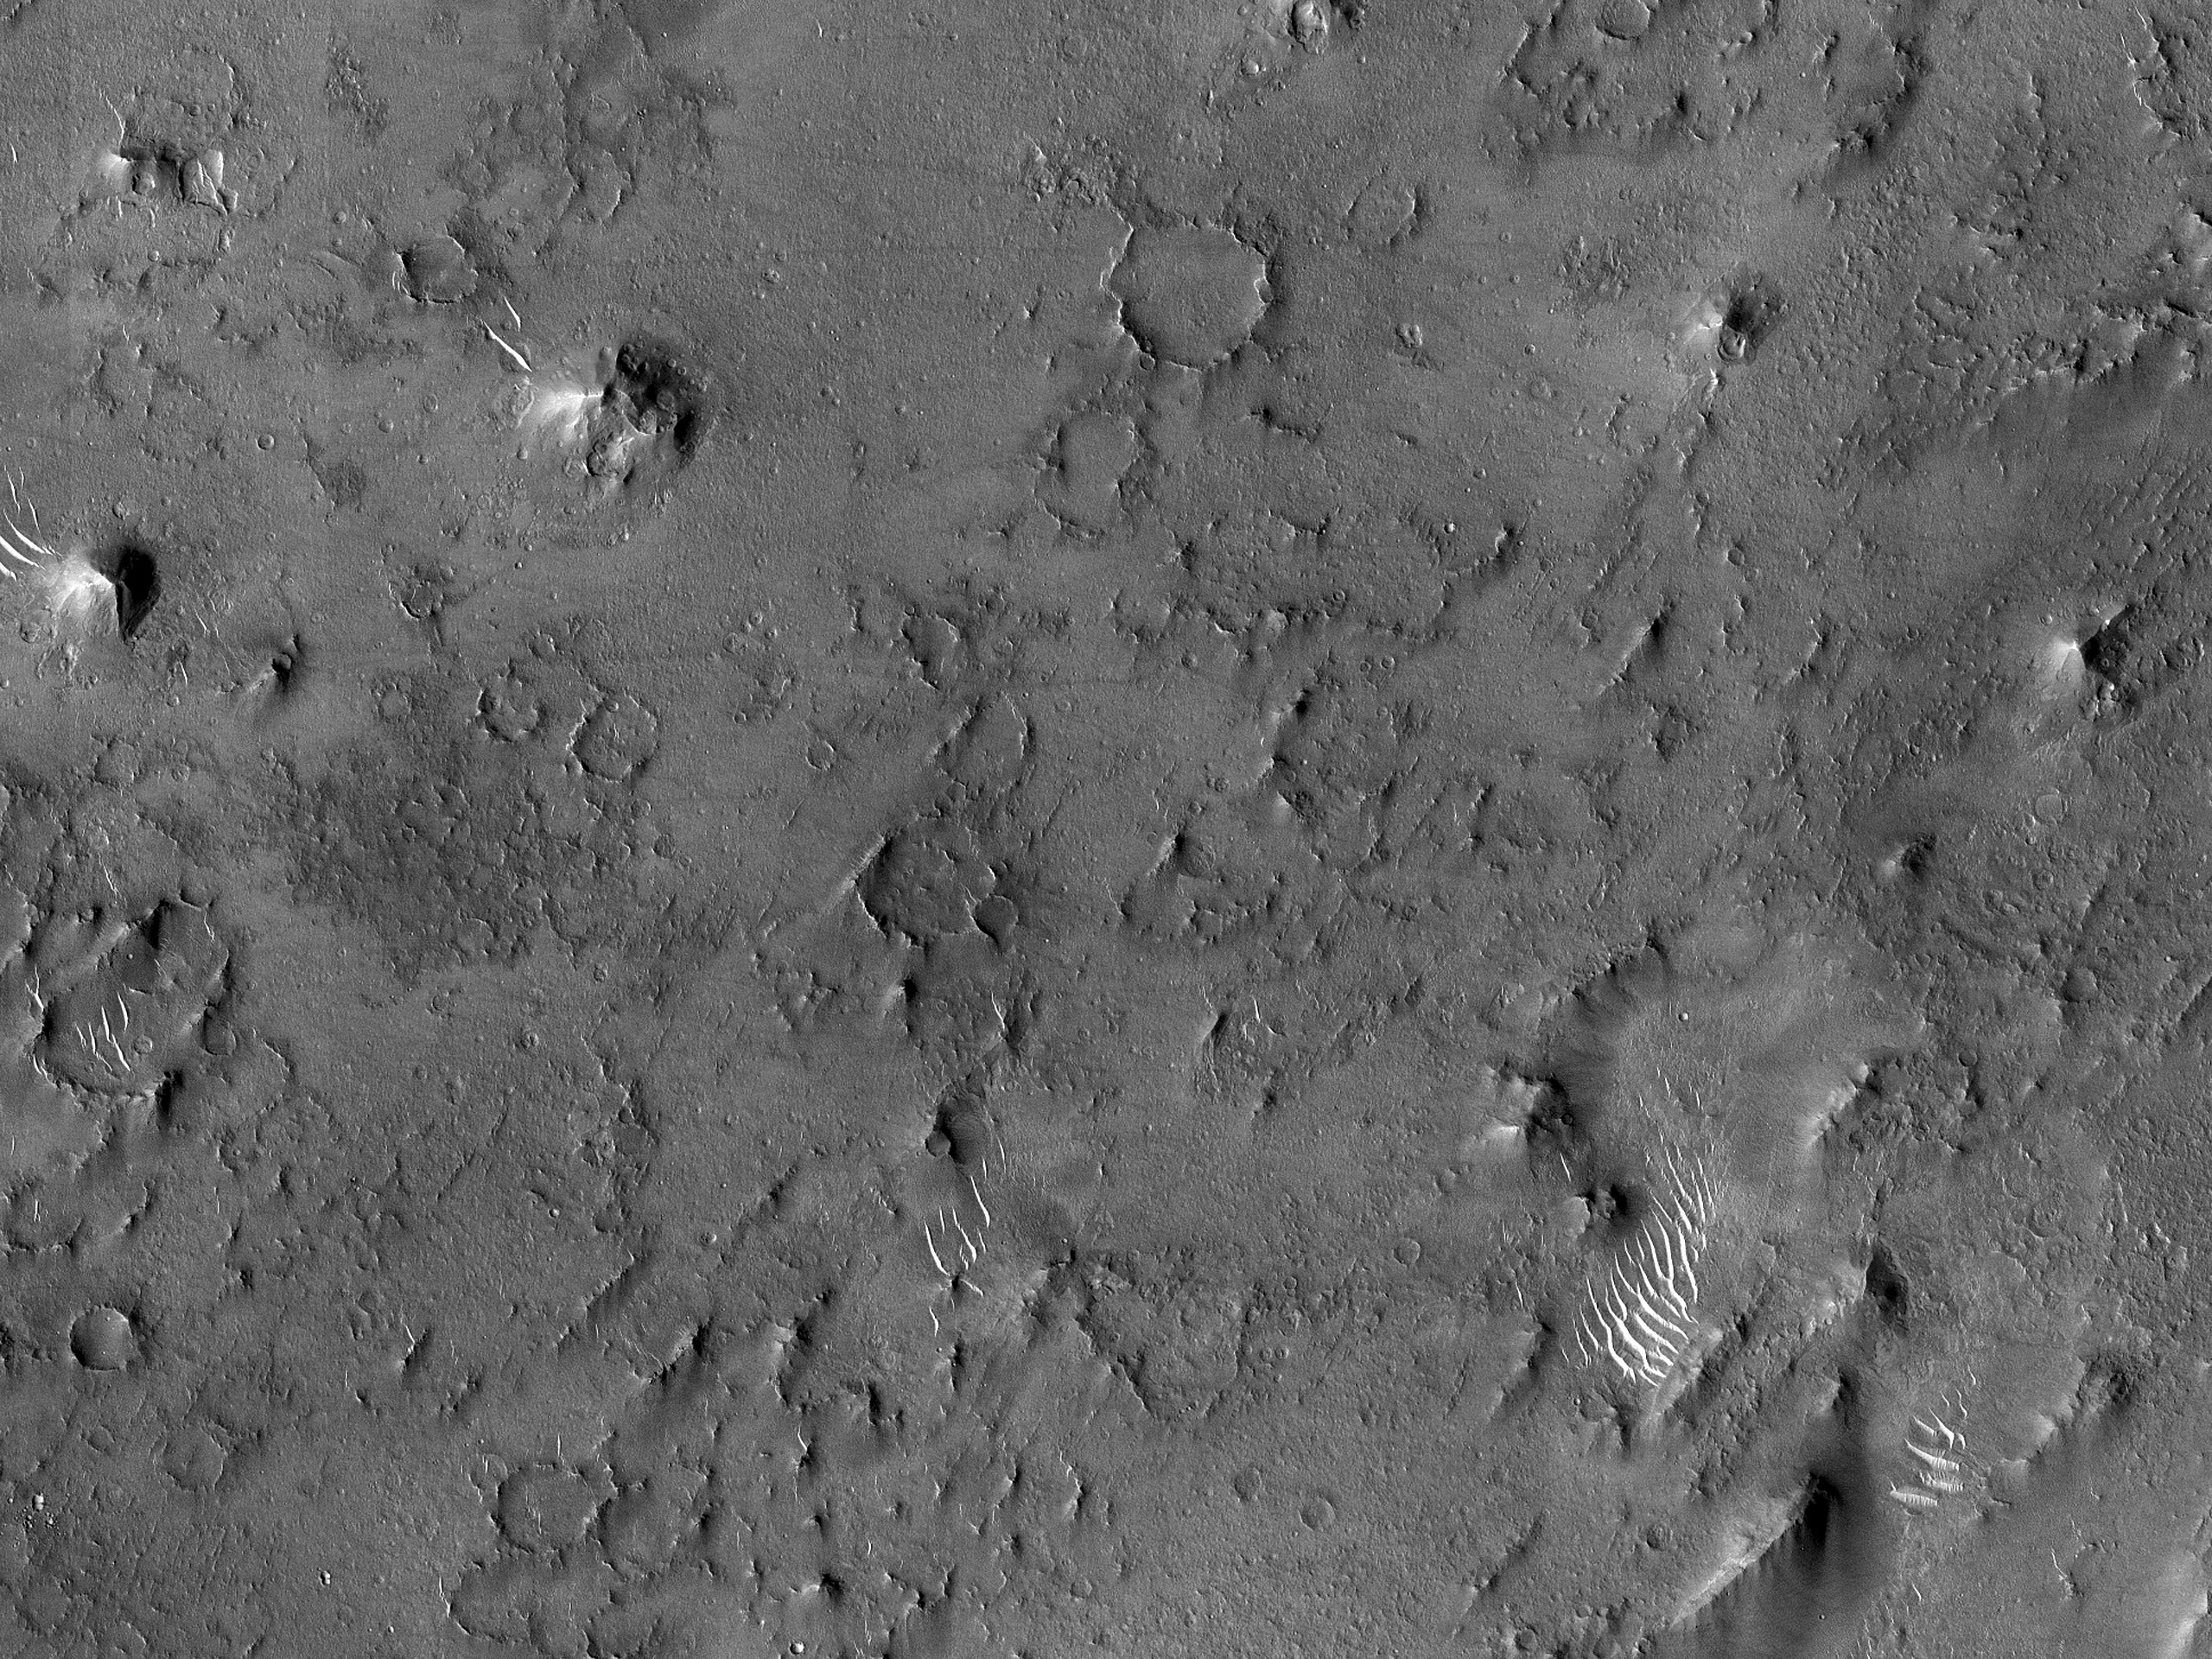 Leading into Isidis Planitia